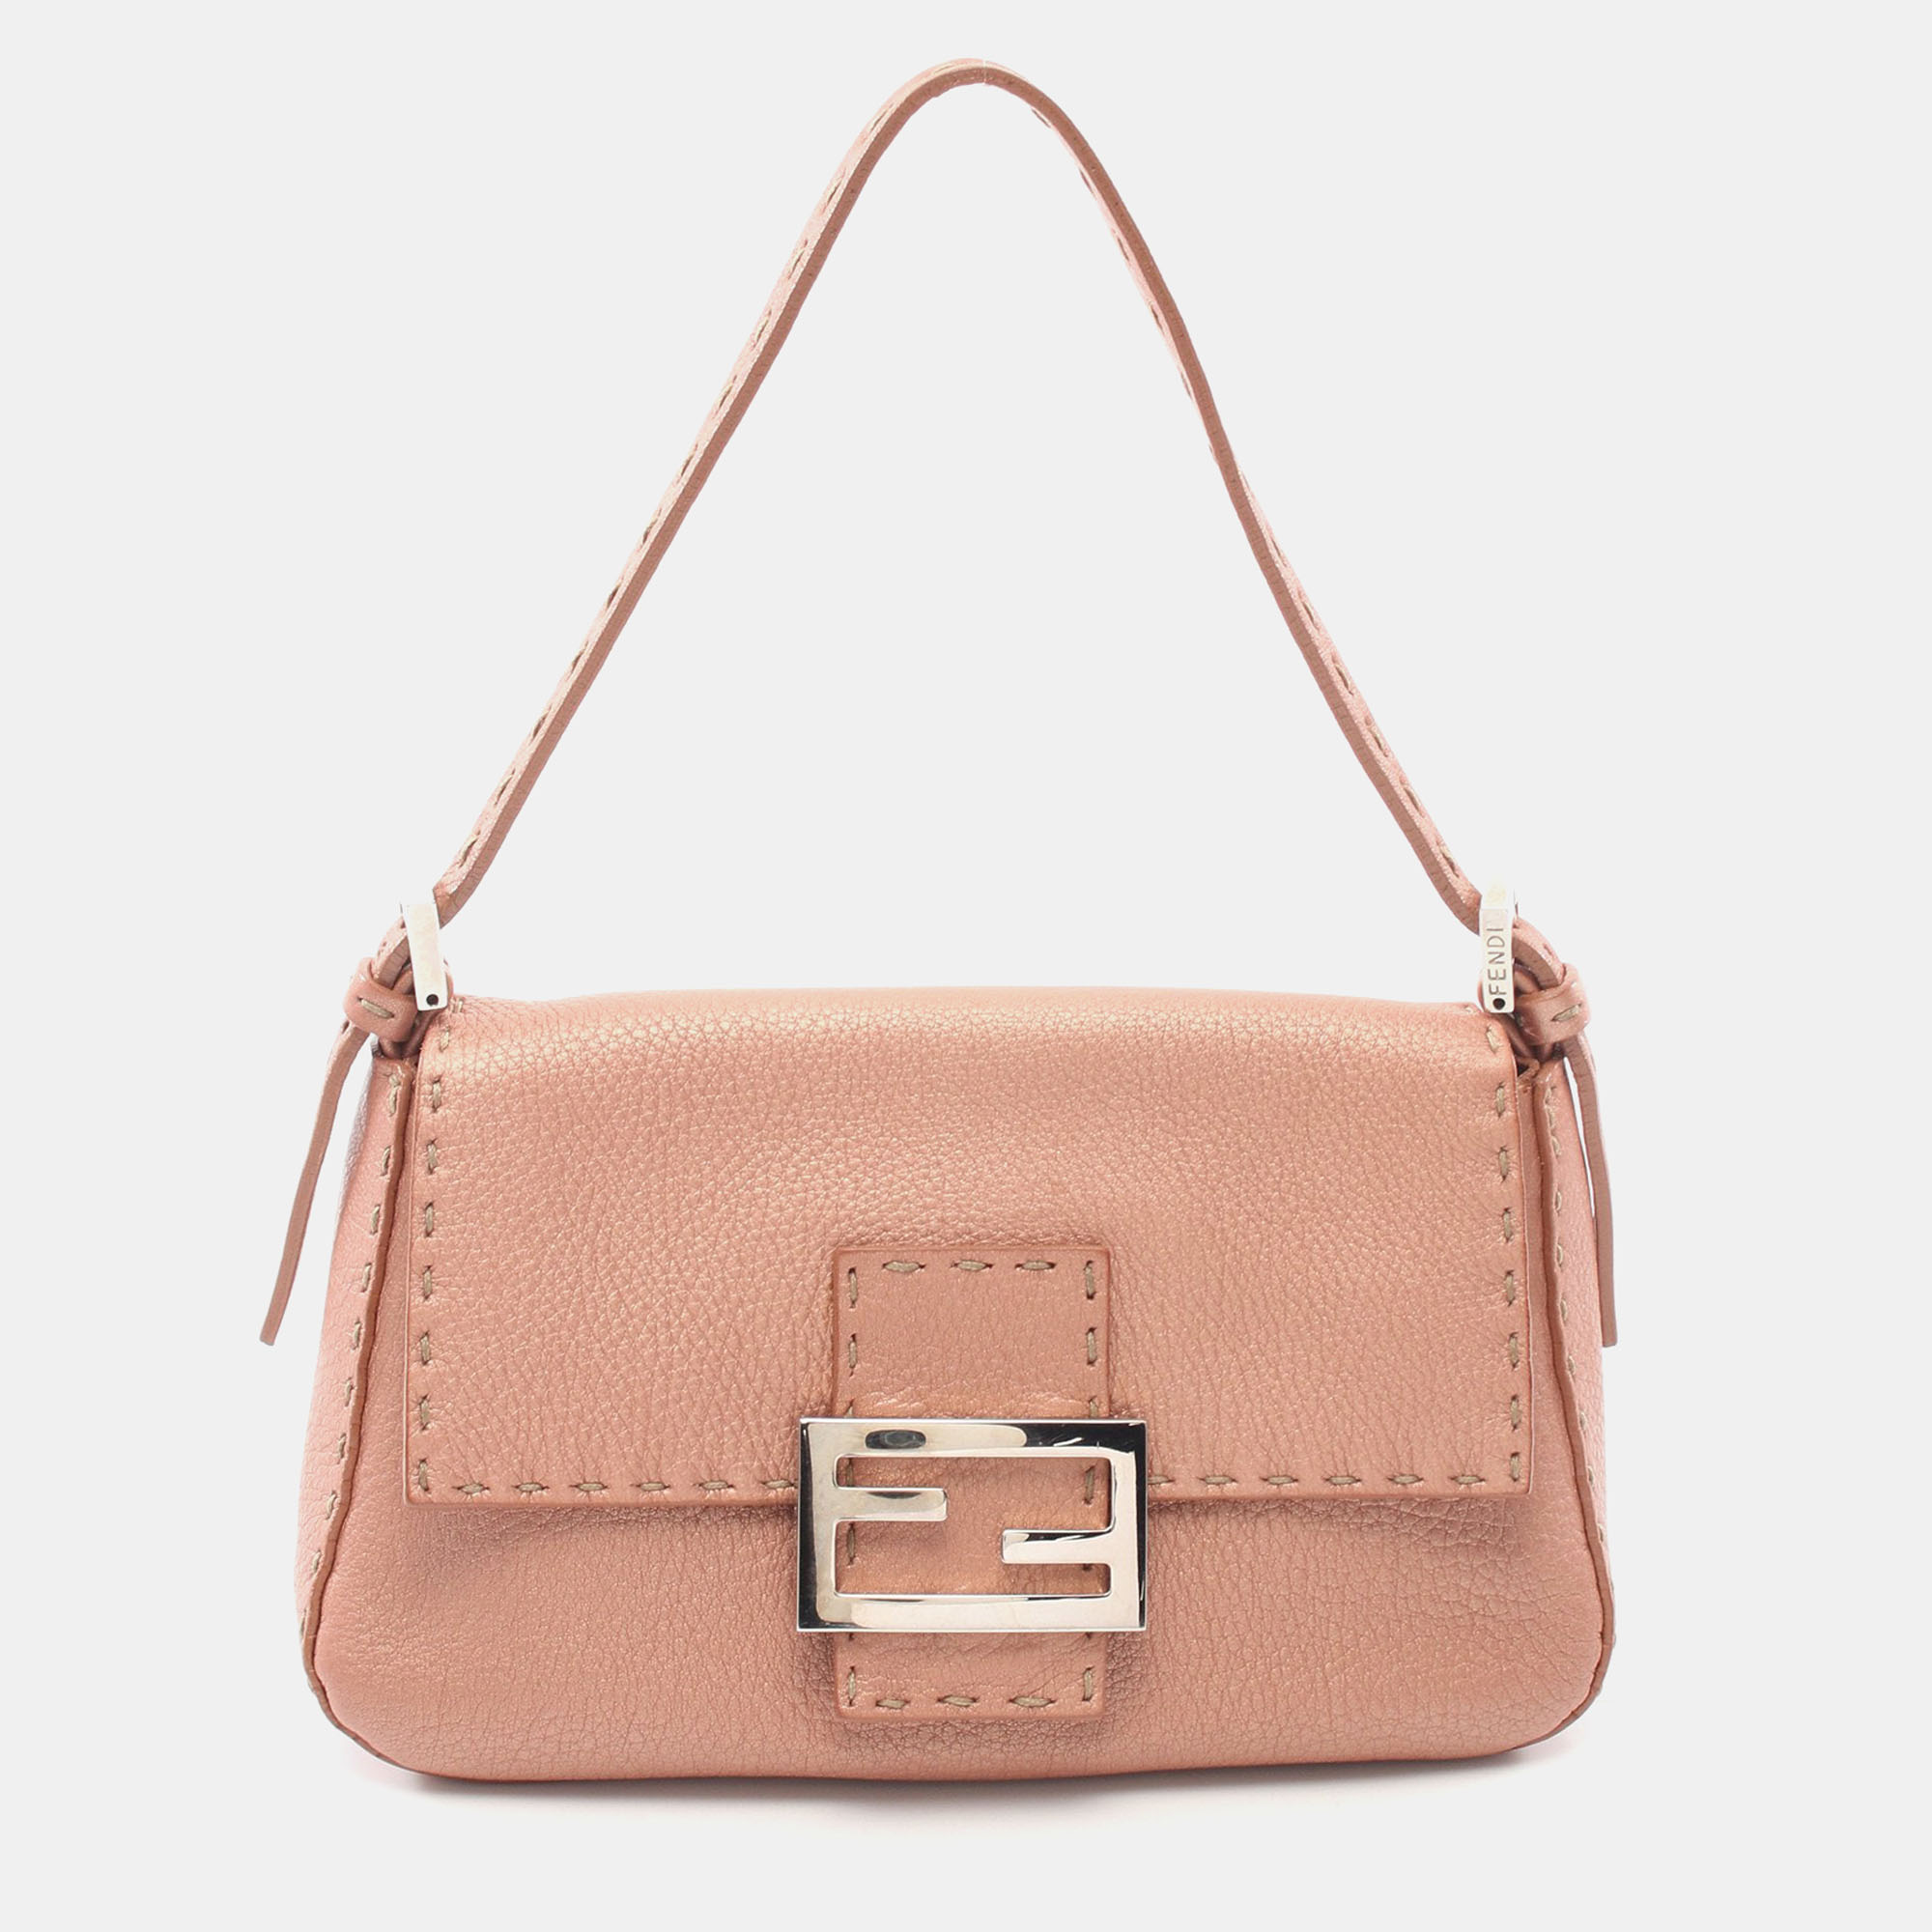 Fendi mamma bucket selleria handbag leather pink beige metallic